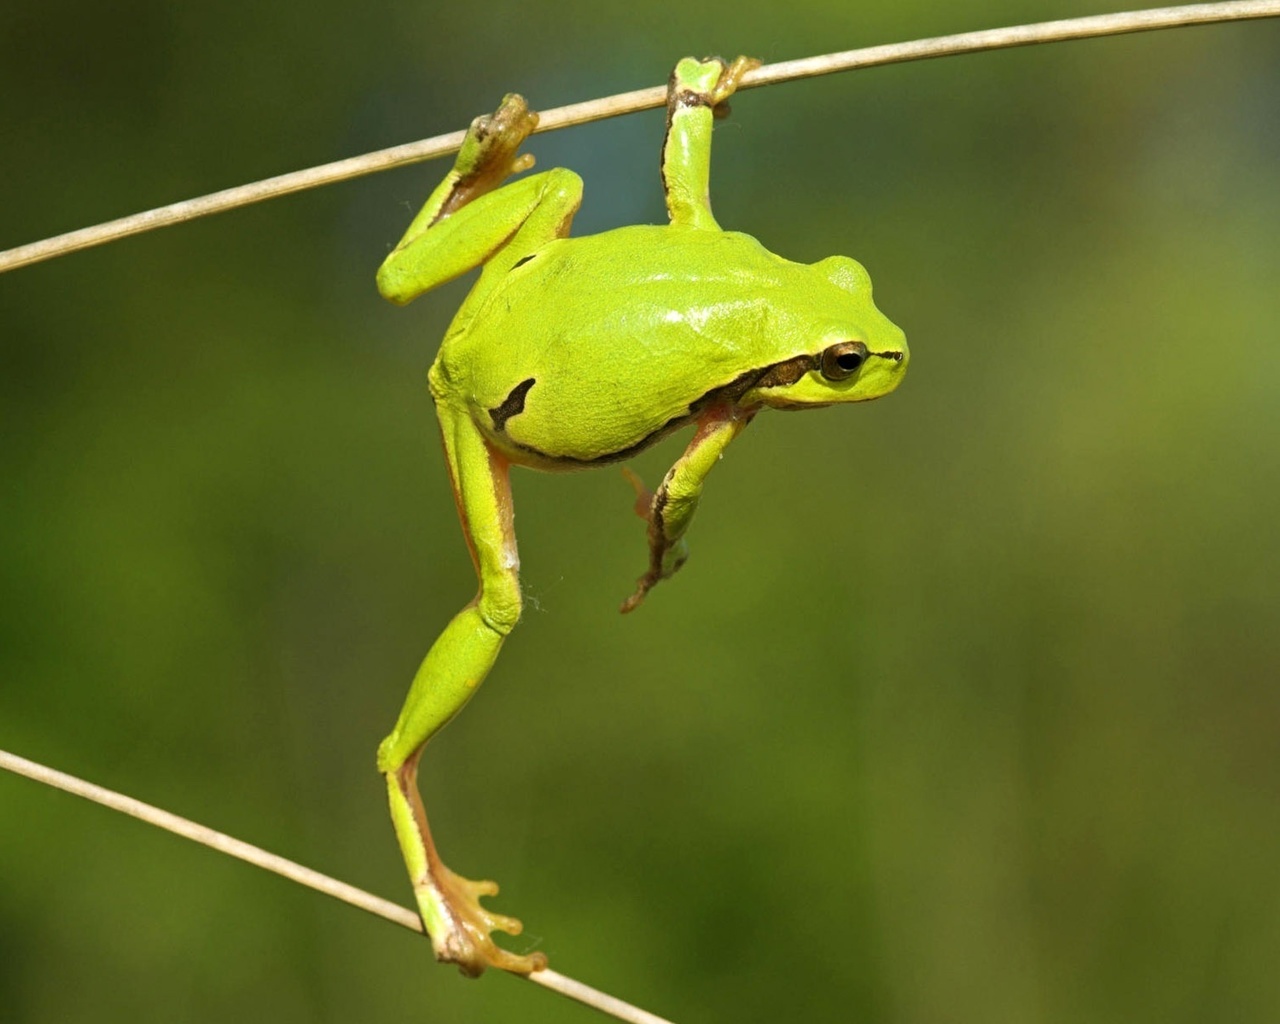 frog, green, branch, tree, wild